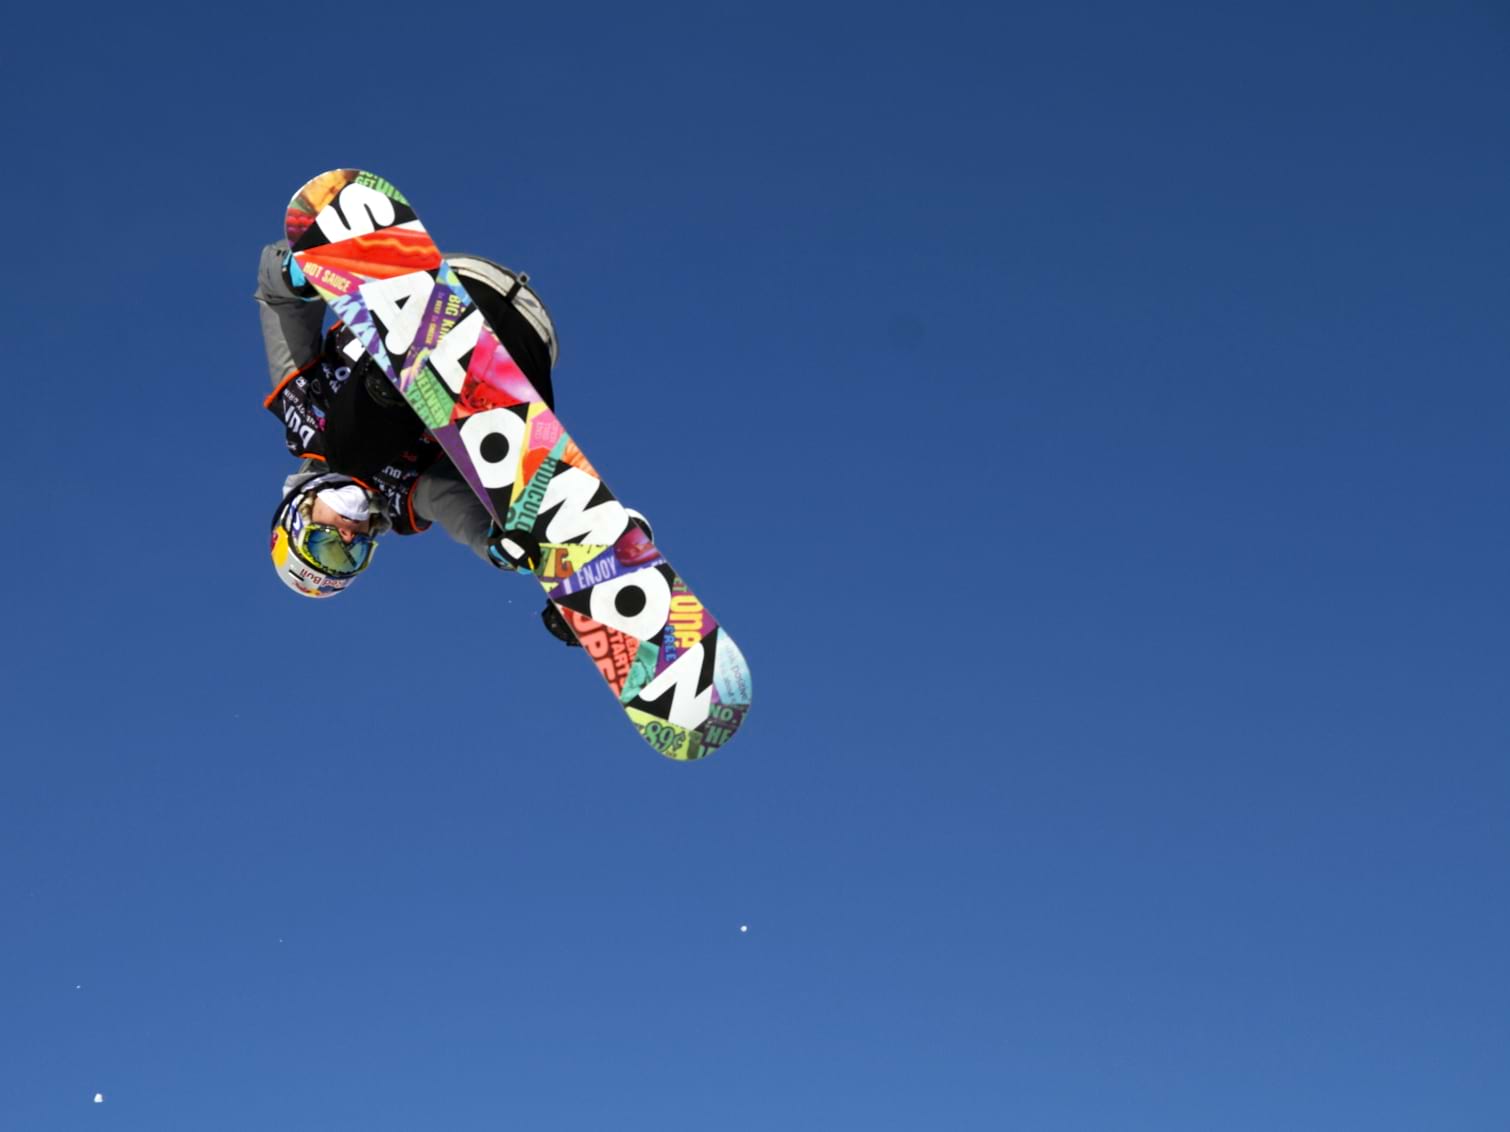 Snow boarder getting air